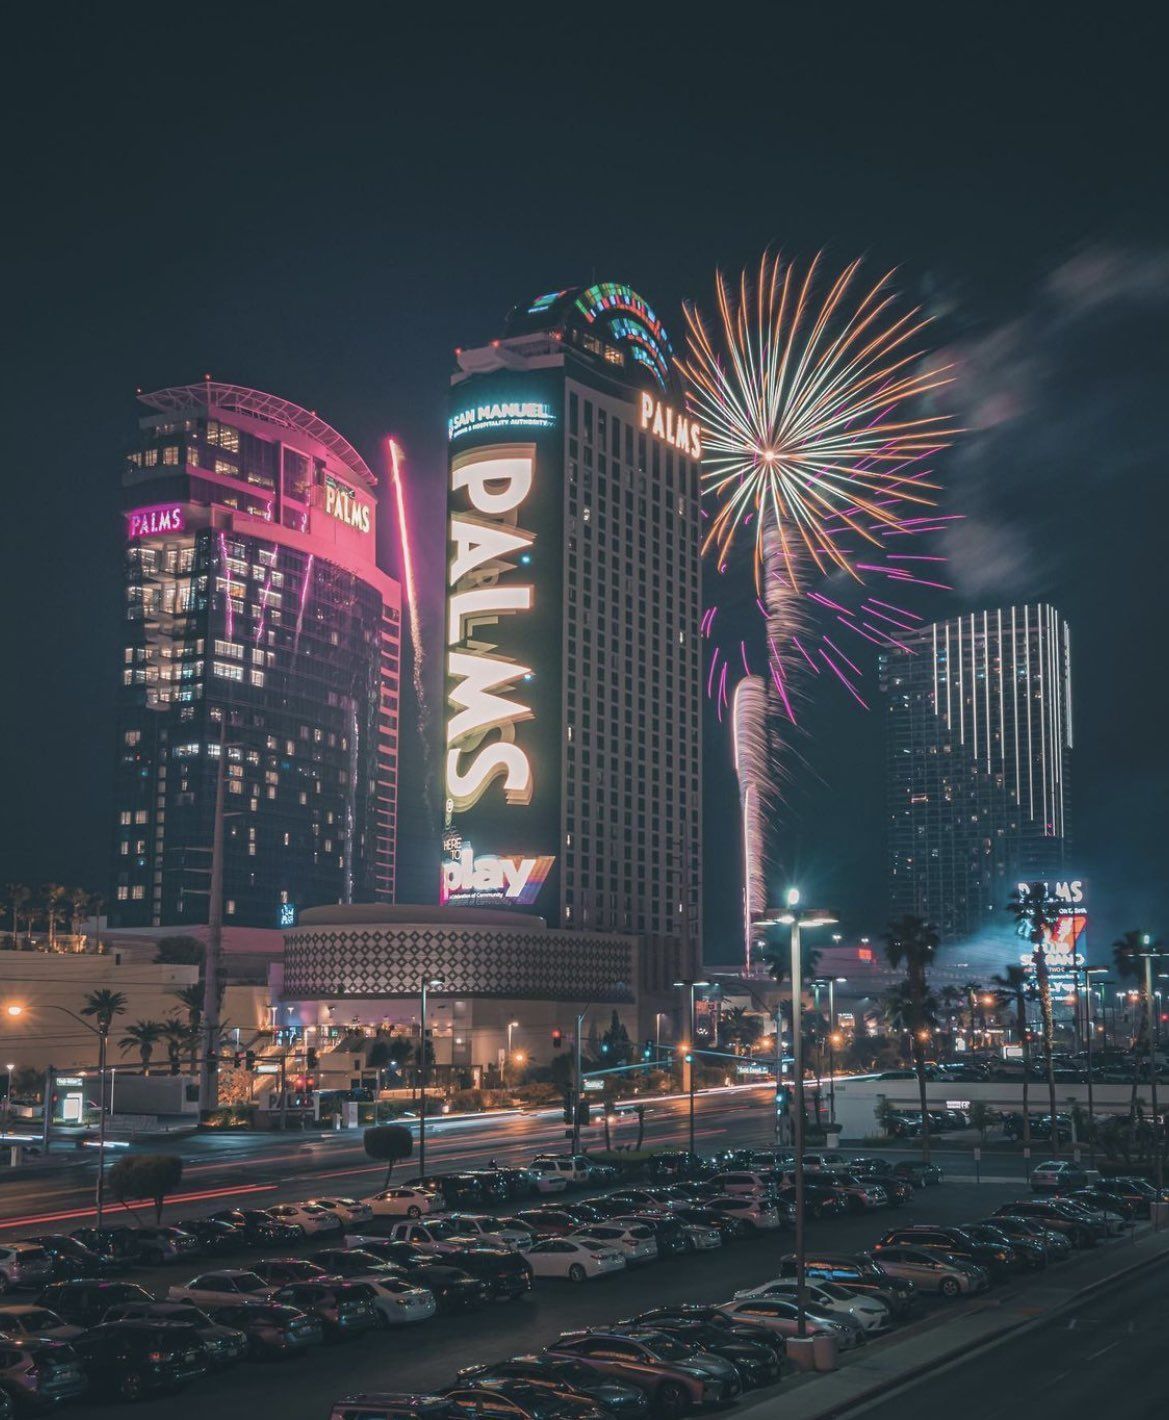 Fireworks light up the sky over the Palms Casino Resort in Las Vegas. - Las Vegas